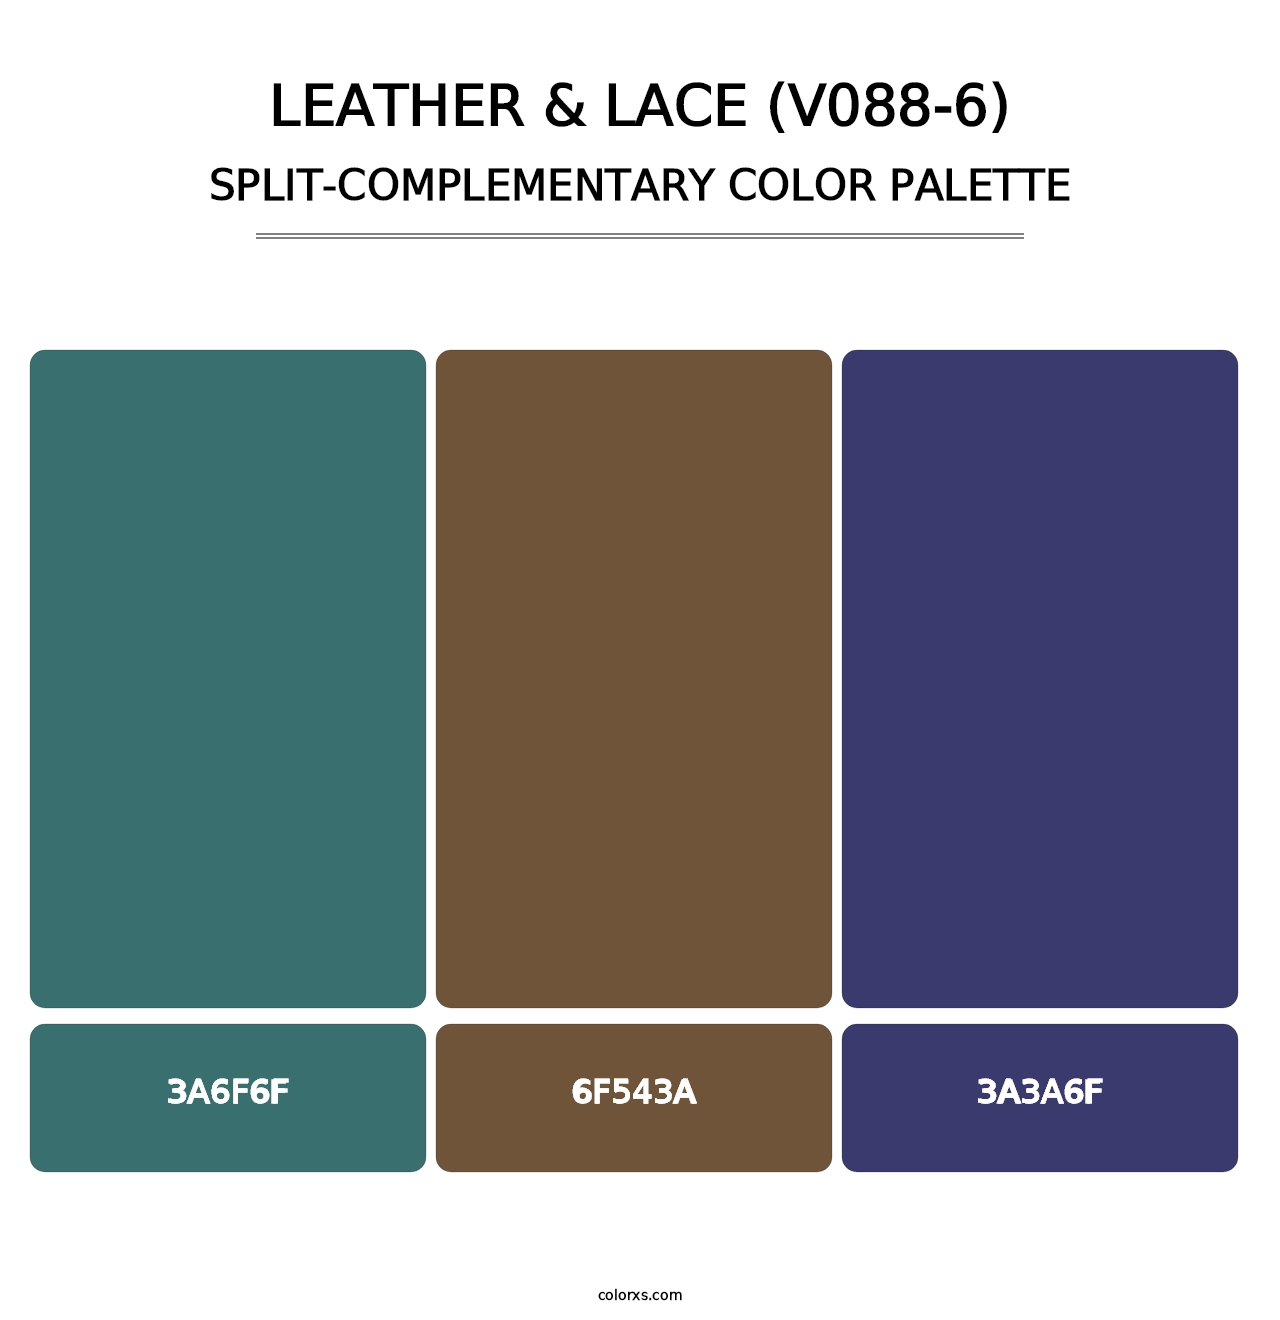 Leather & Lace (V088-6) - Split-Complementary Color Palette